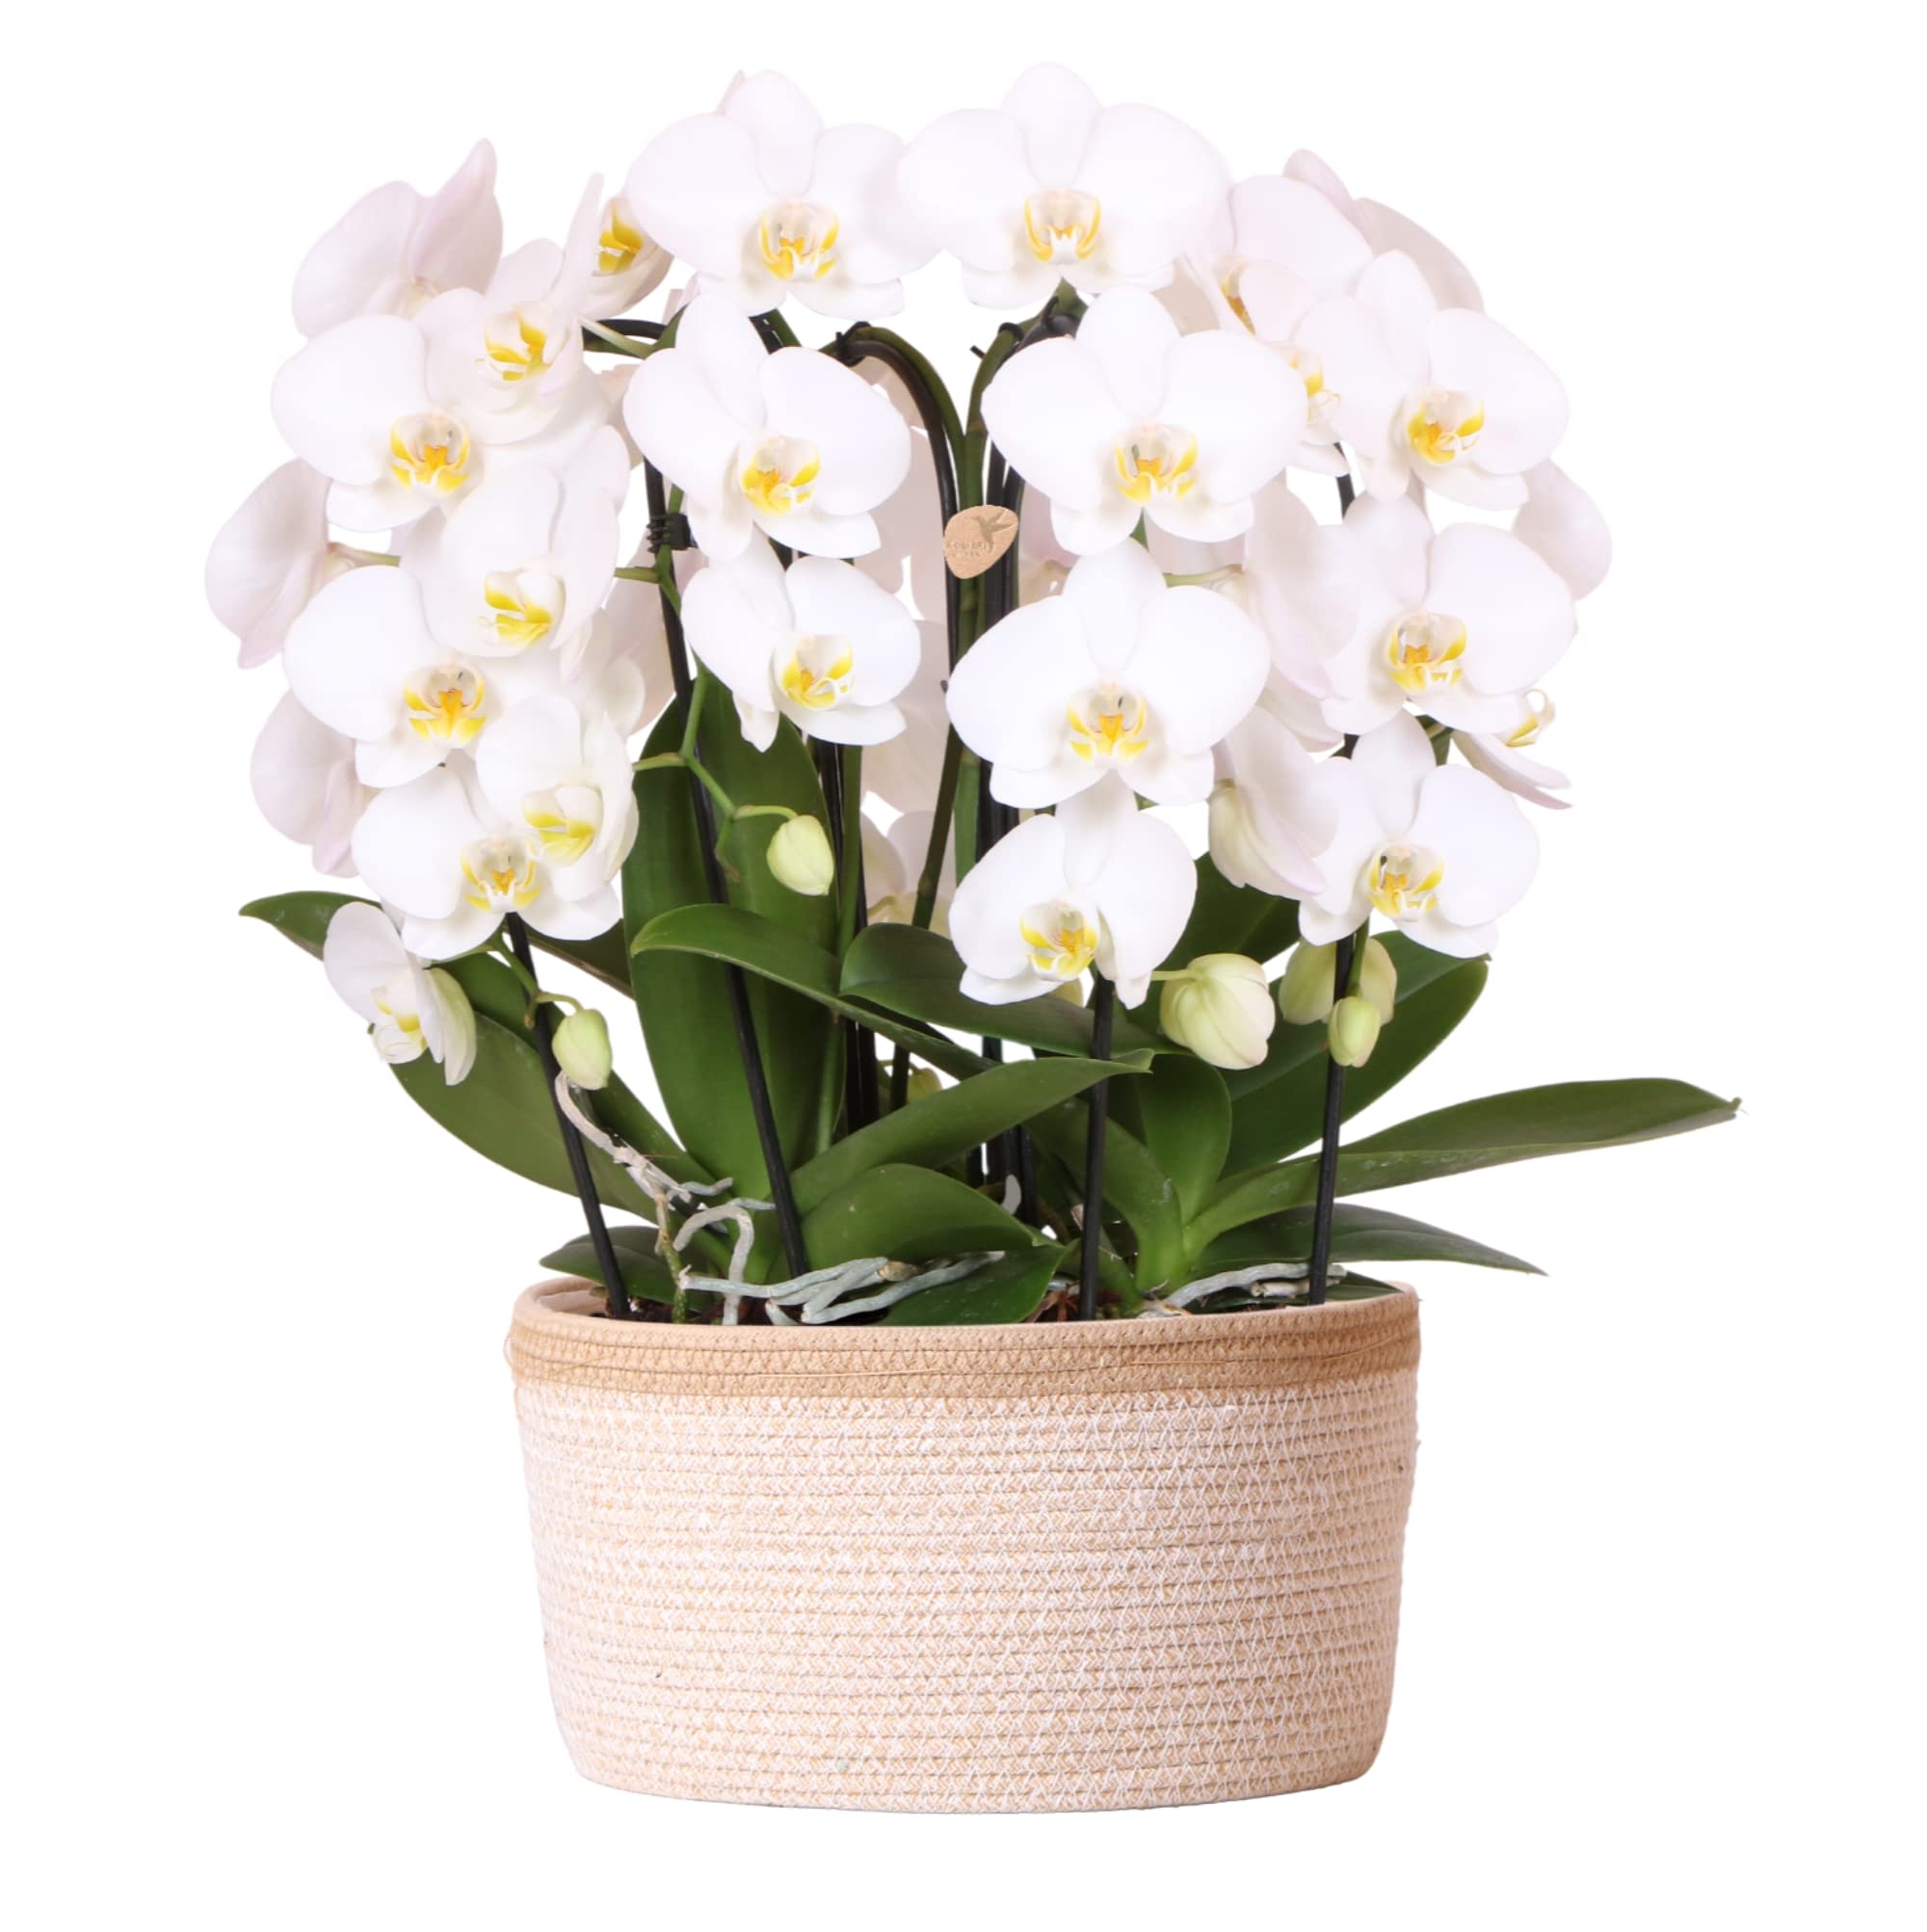 Kolibri Orchids | weißes Orchideen-Set im Baumwollkorb inkl. Wassertank | drei geschwungene weiße Orchideen Niagara Fall 12cm | Mono Bouquet weiß mit Selbstversorger